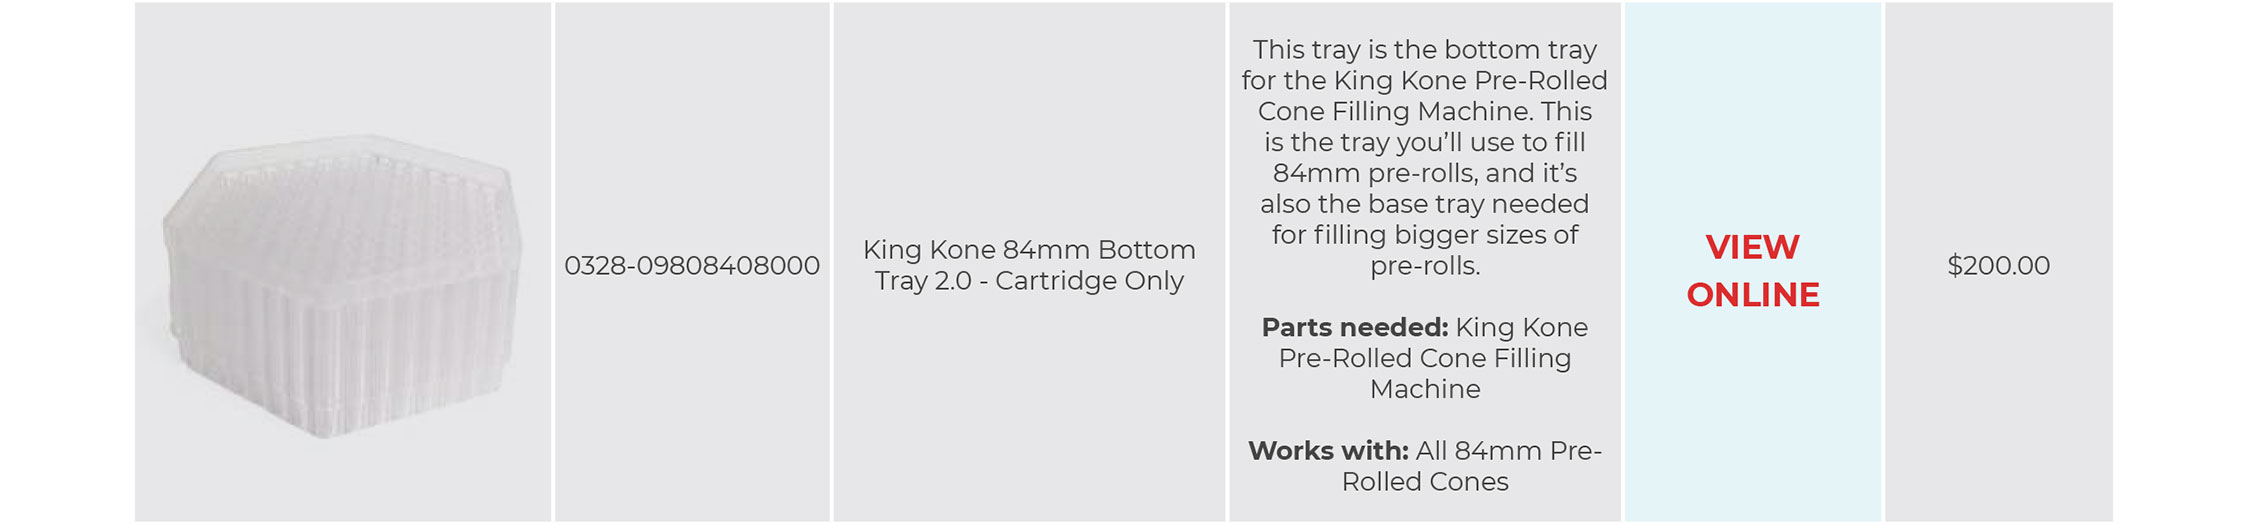  King Kone 84mm Bottom Tray 2.0 - Cartridge Only